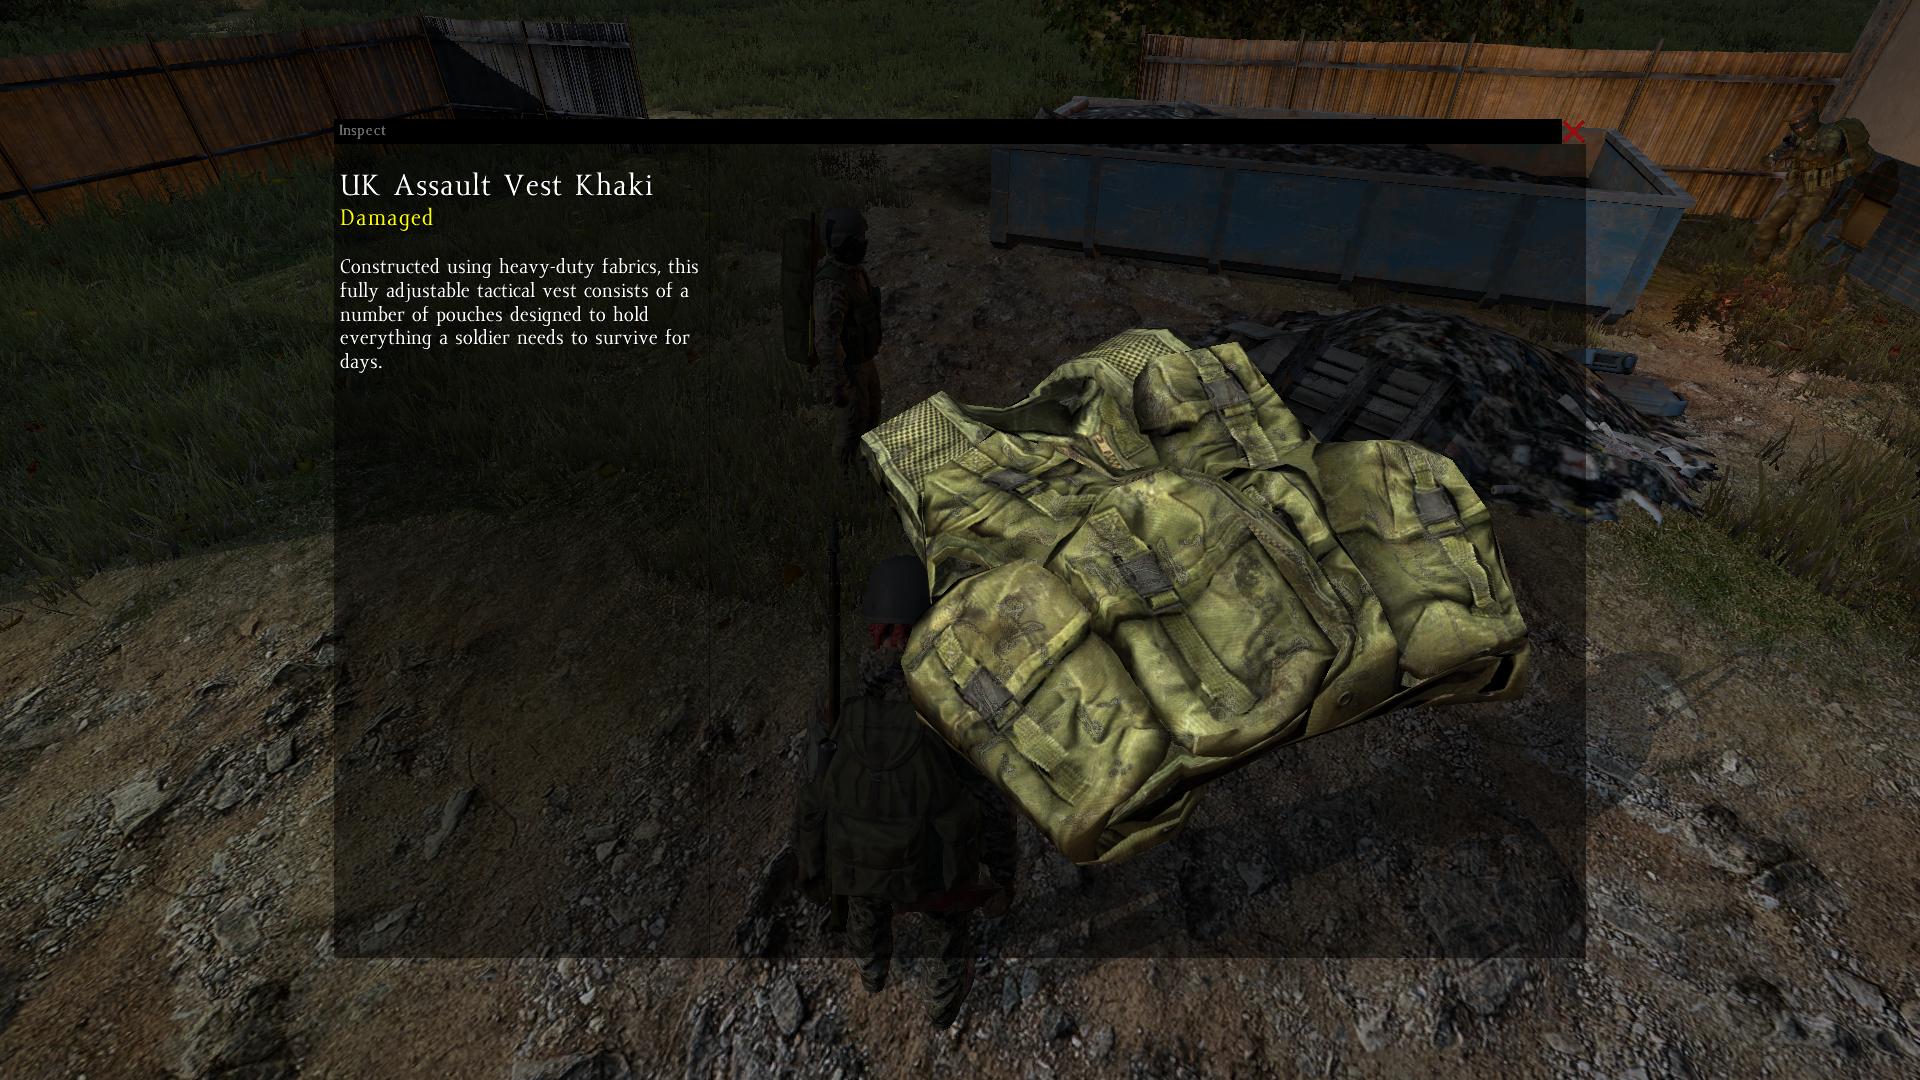 UK Assault Vest Khaki dayz screenshot